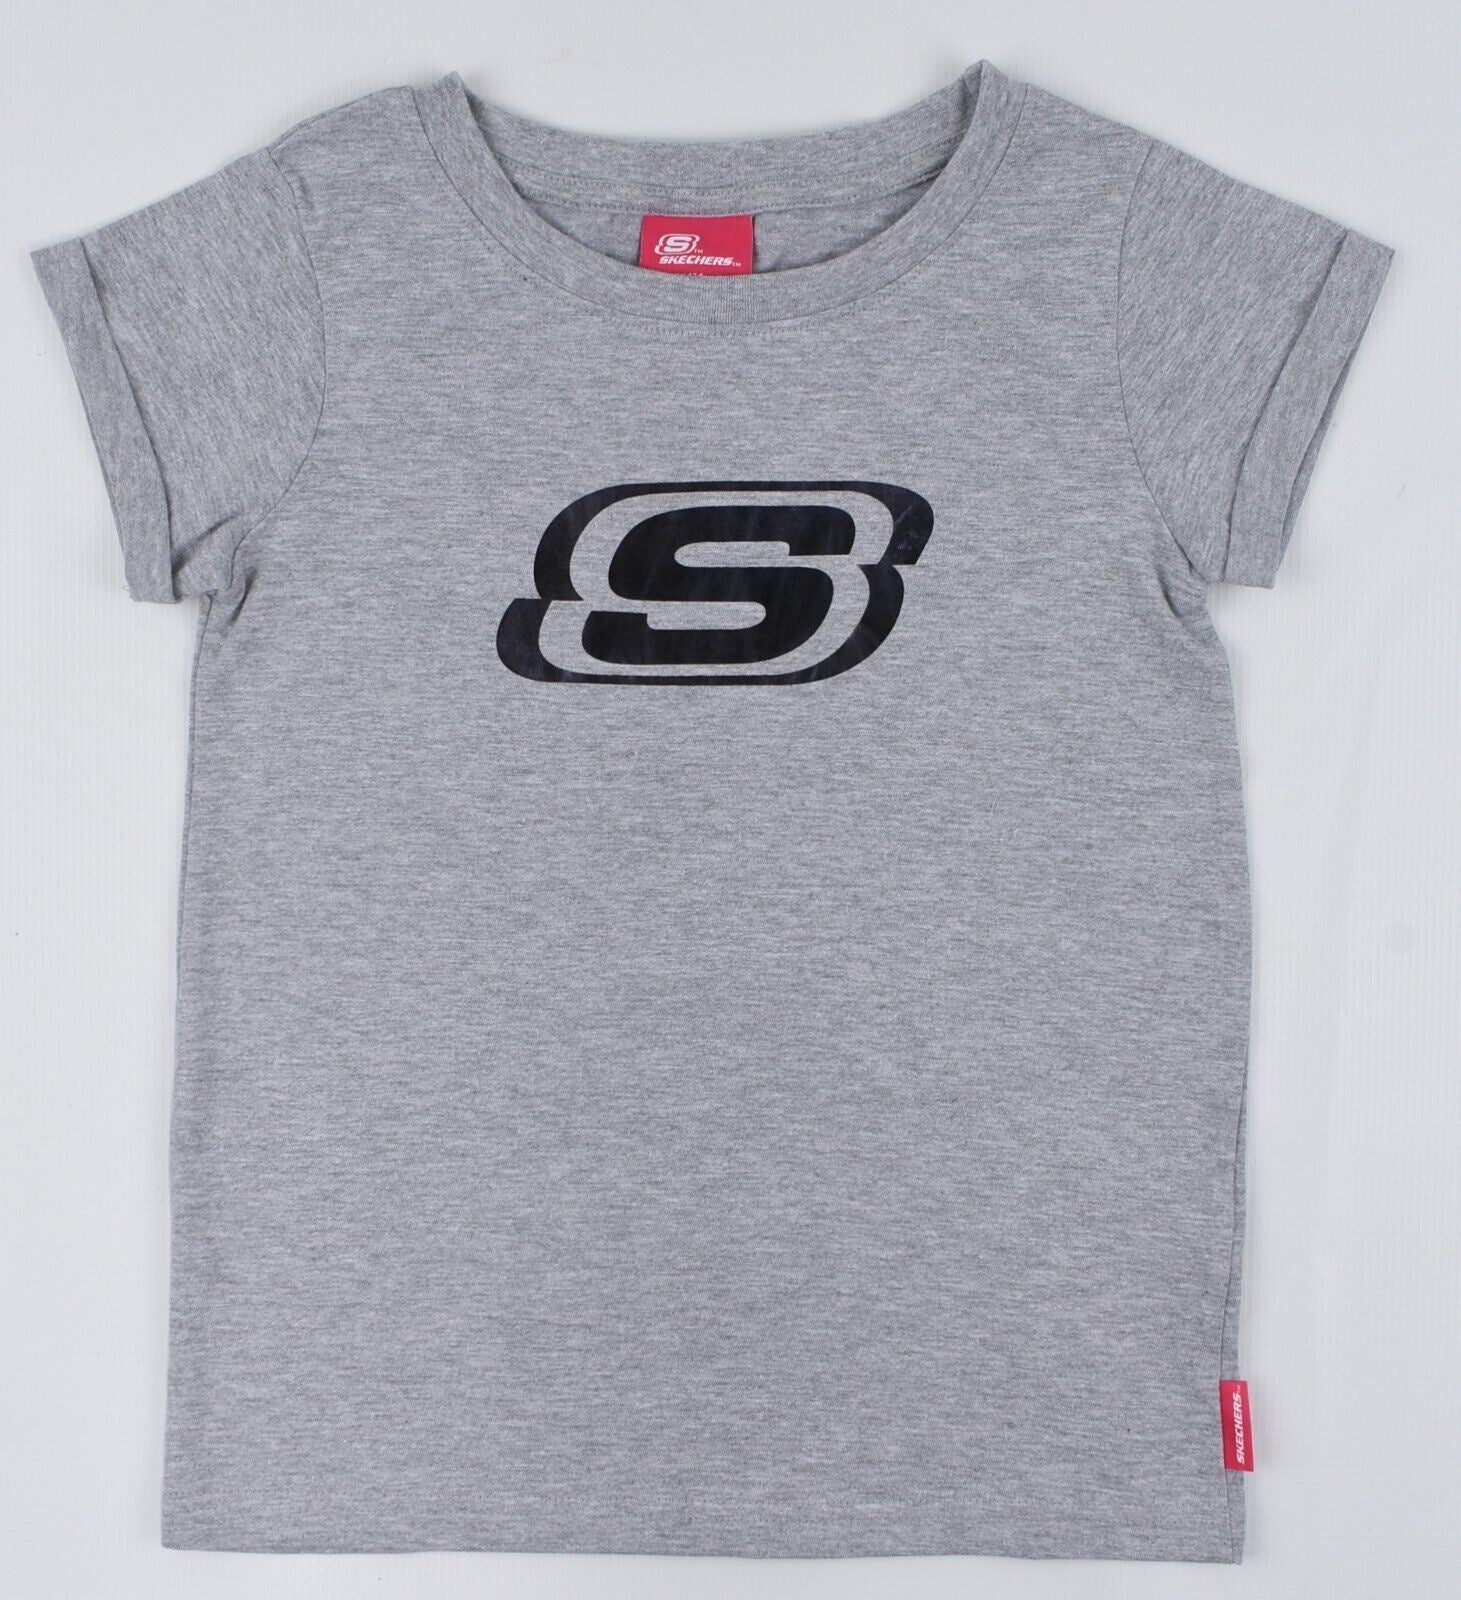 SKECHERS Girls' Kids' Crew Neck Logo T-shirt, Grey/Black Logo, size 9 years